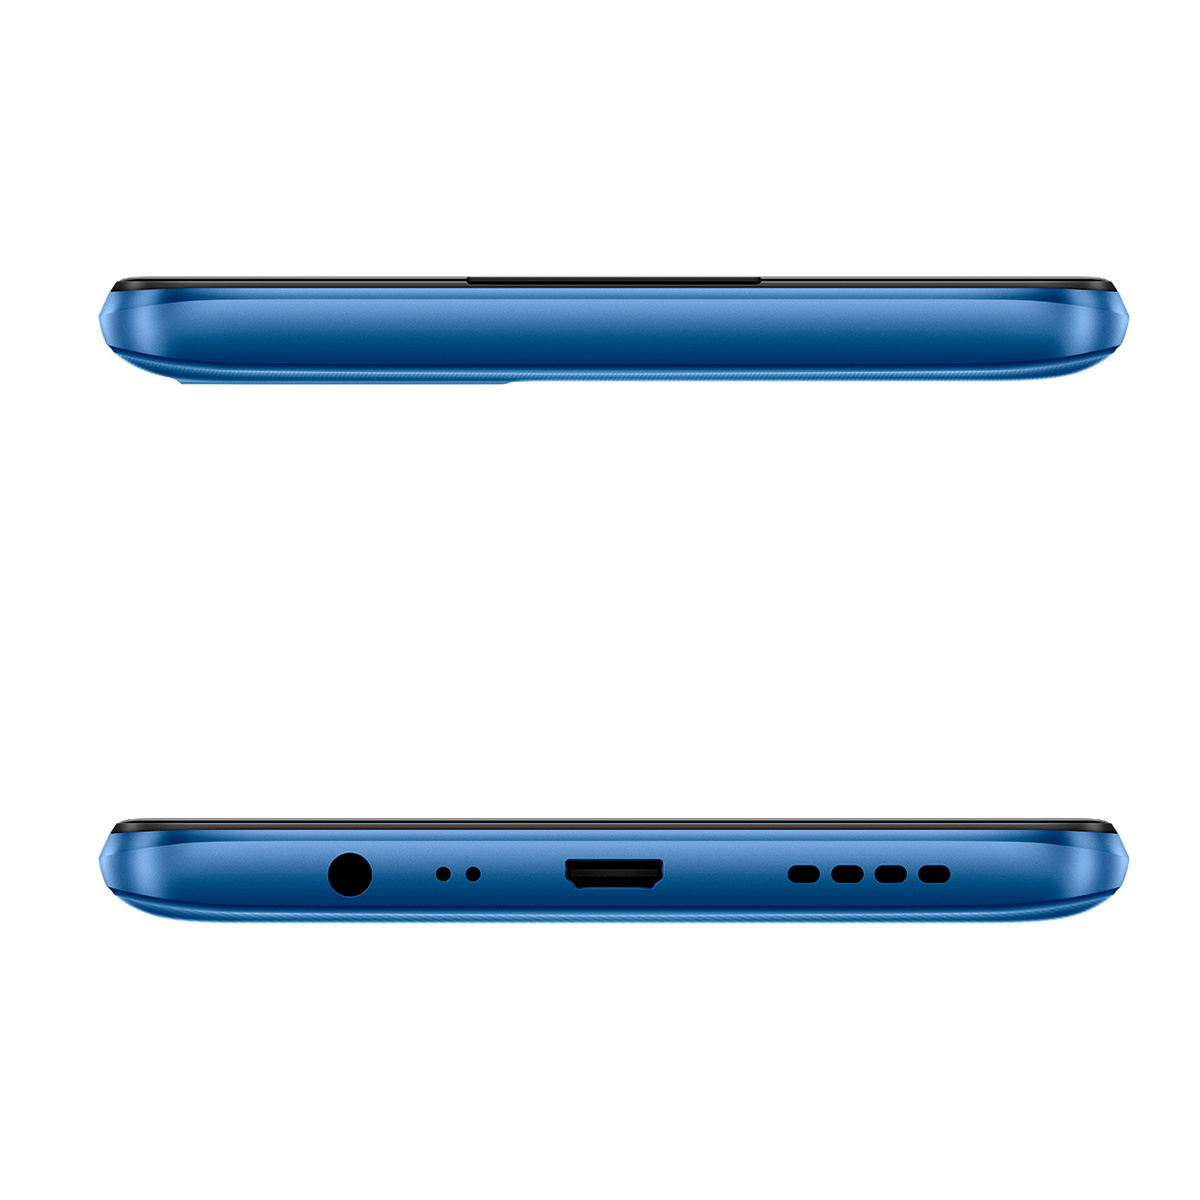 Смартфон realme C15 4/64Gb (NFC) (Цвет: Marine Blue)